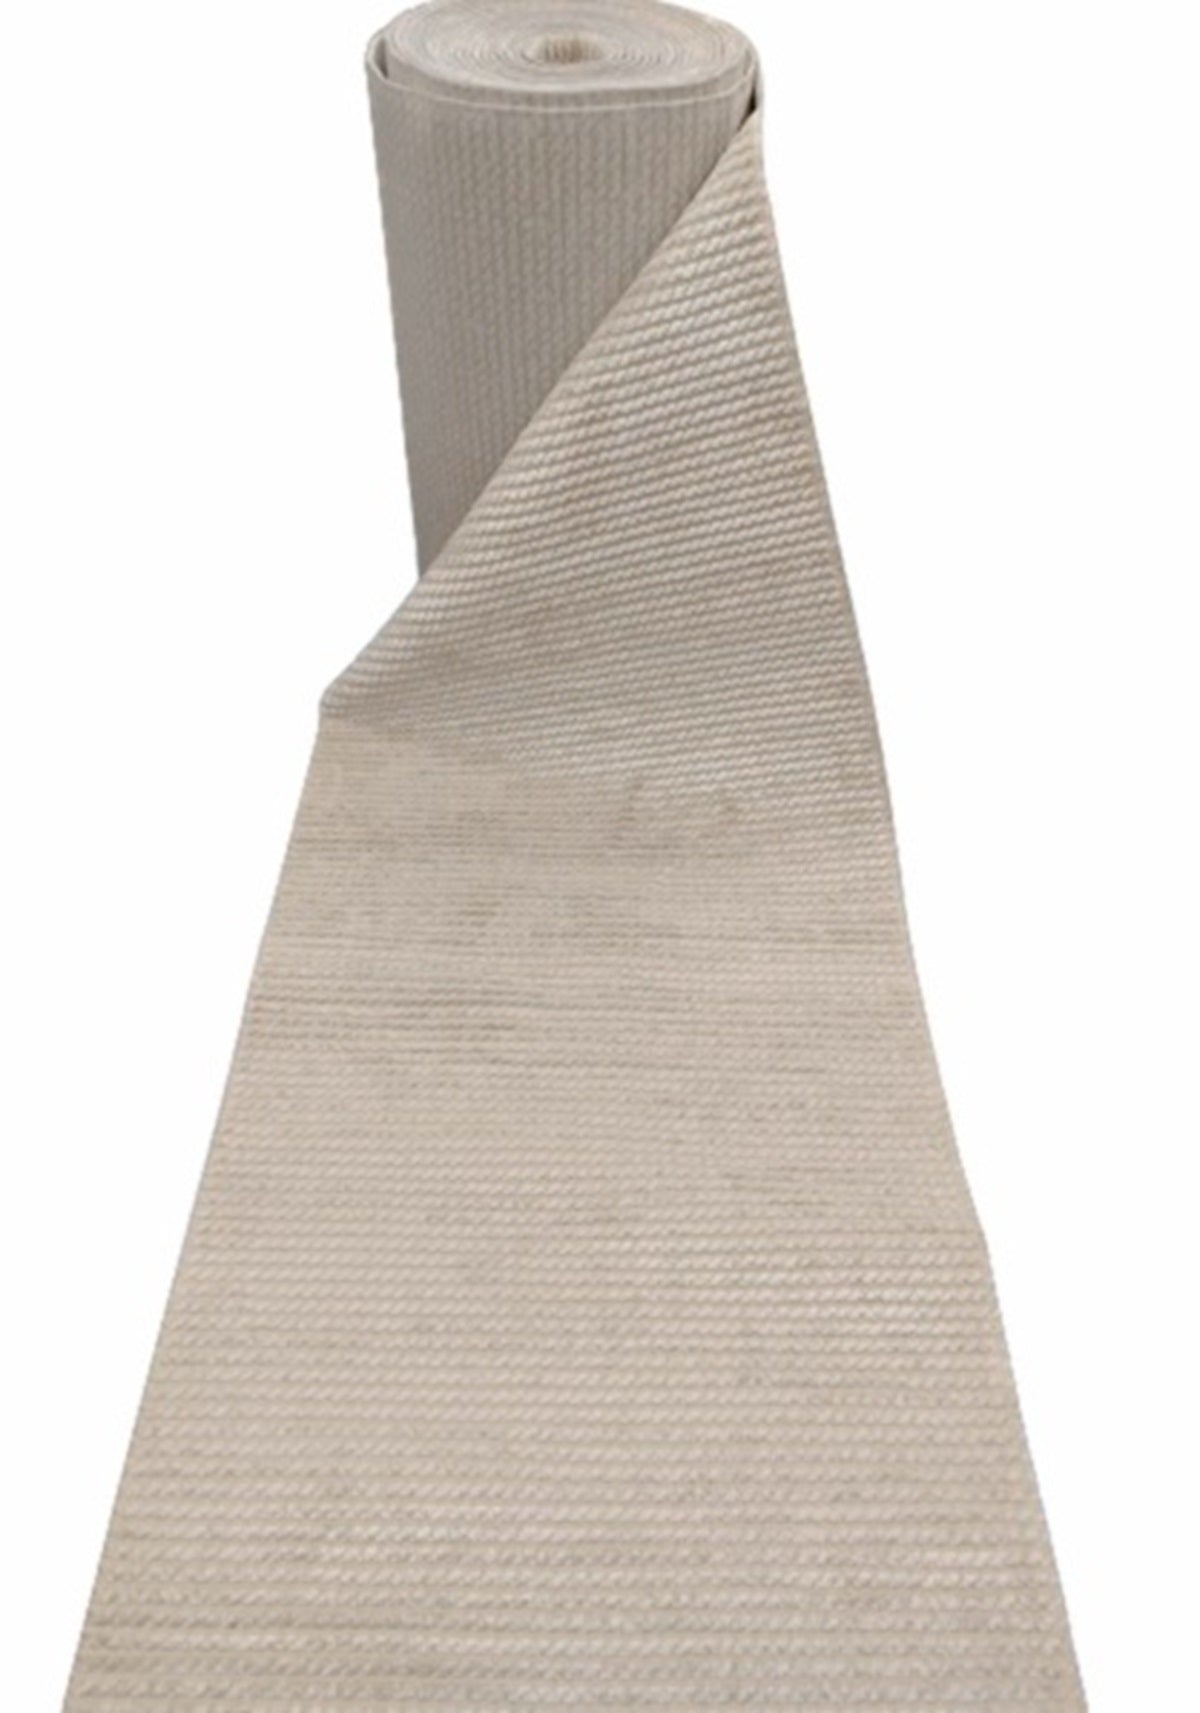 Traversa Pierre Cardin Line, crem, latime 100 cm (surfilata)